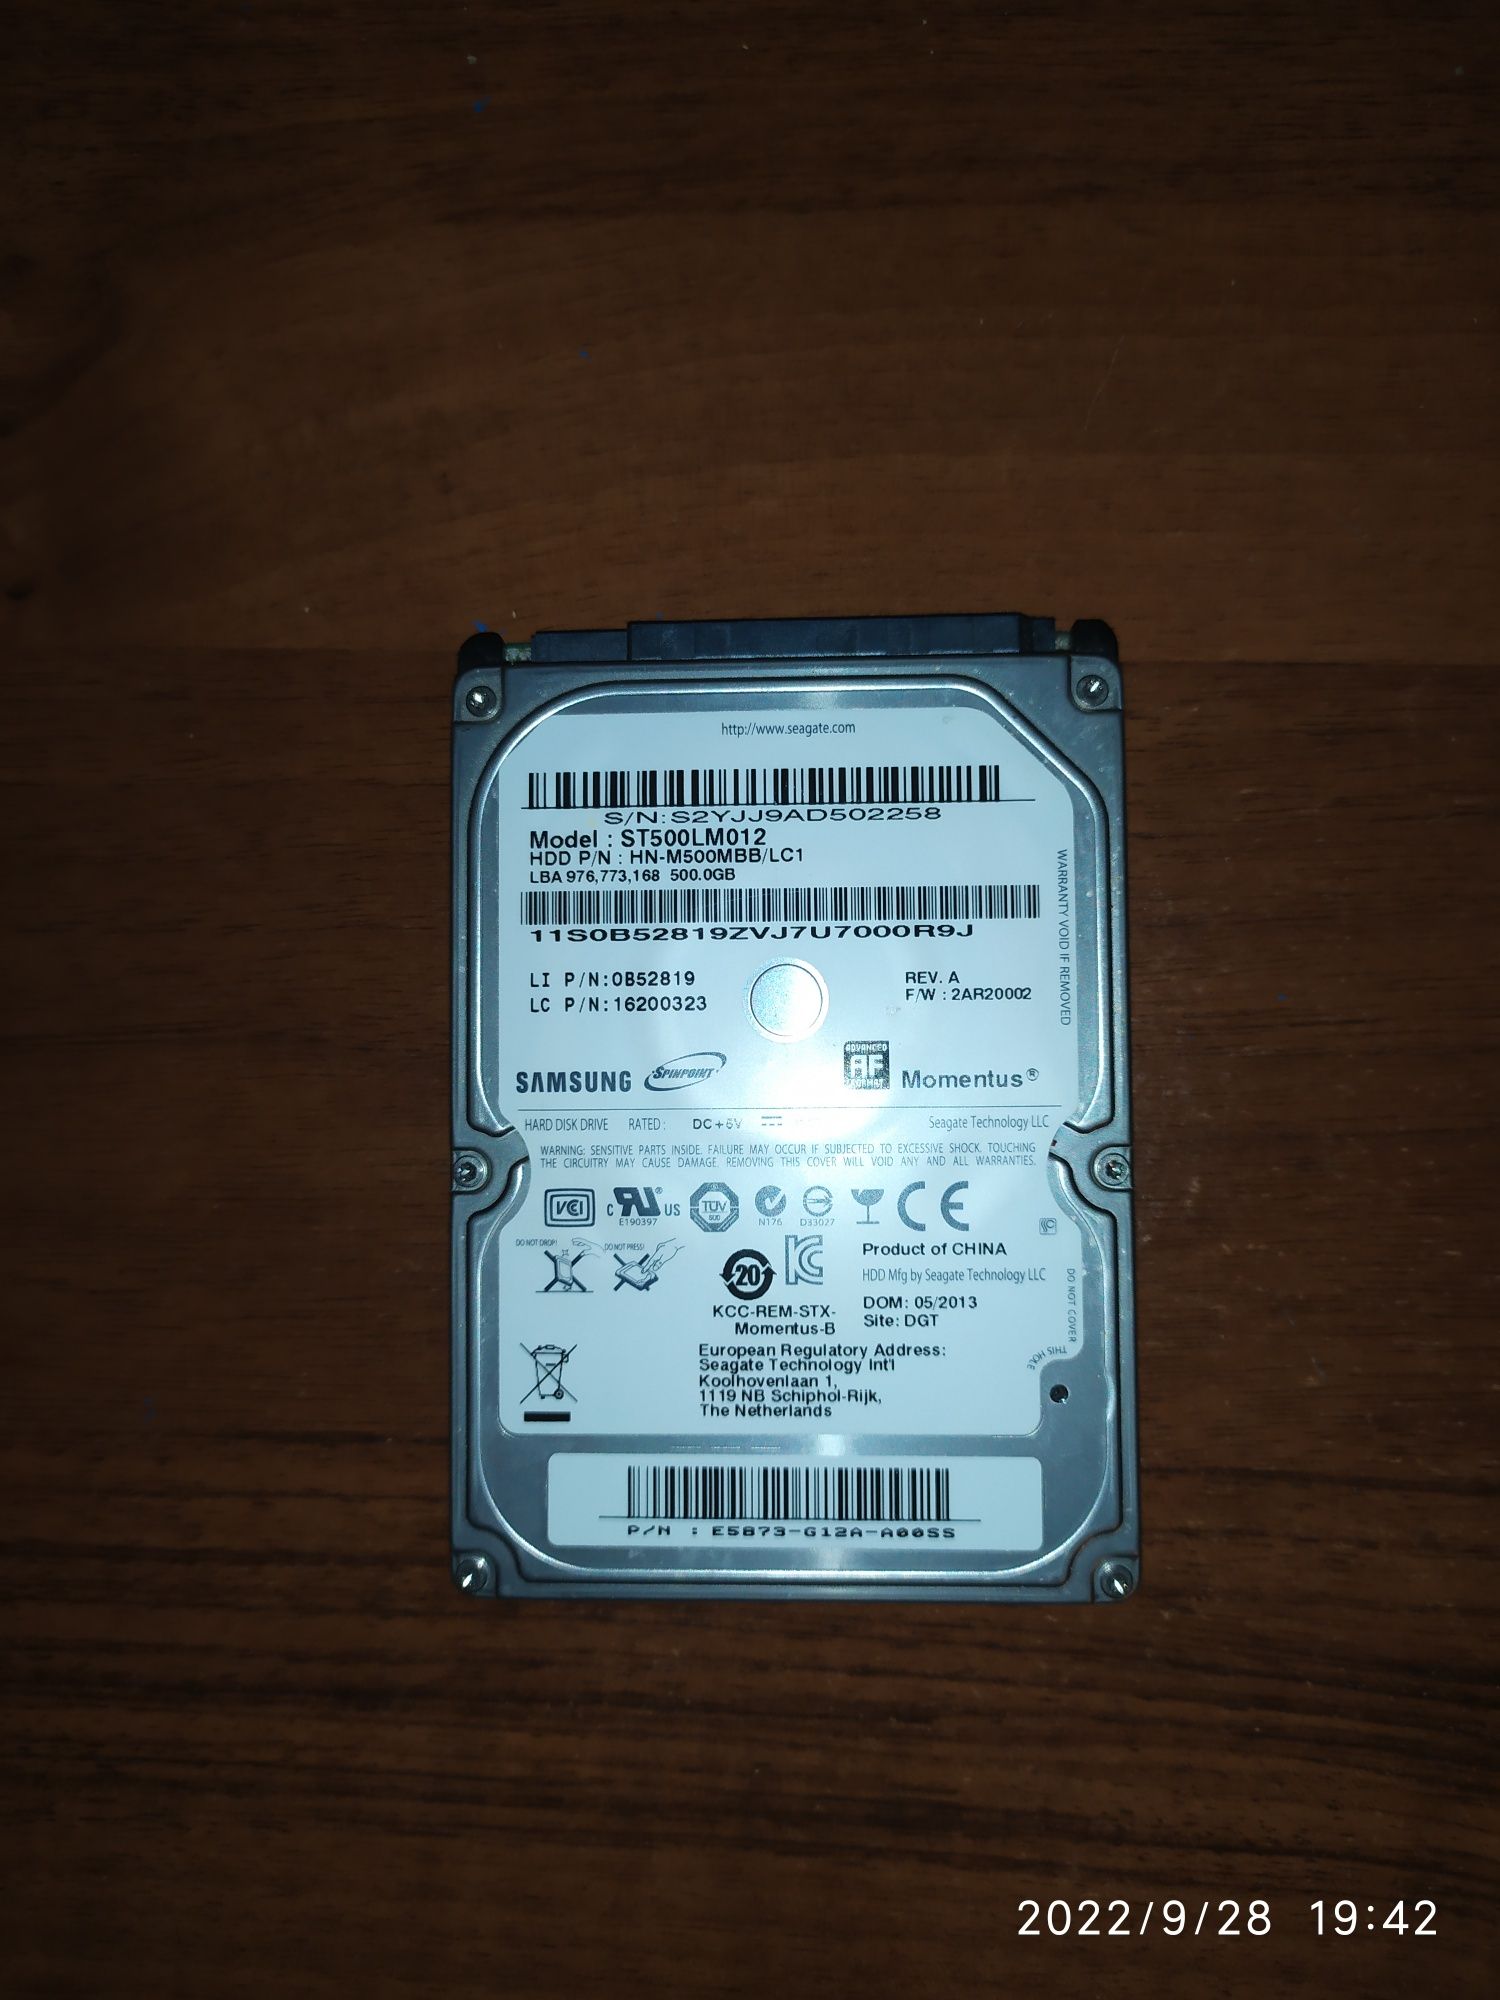 HDD 500 GB ST500LM012 2.5 SATA жорсткий диск